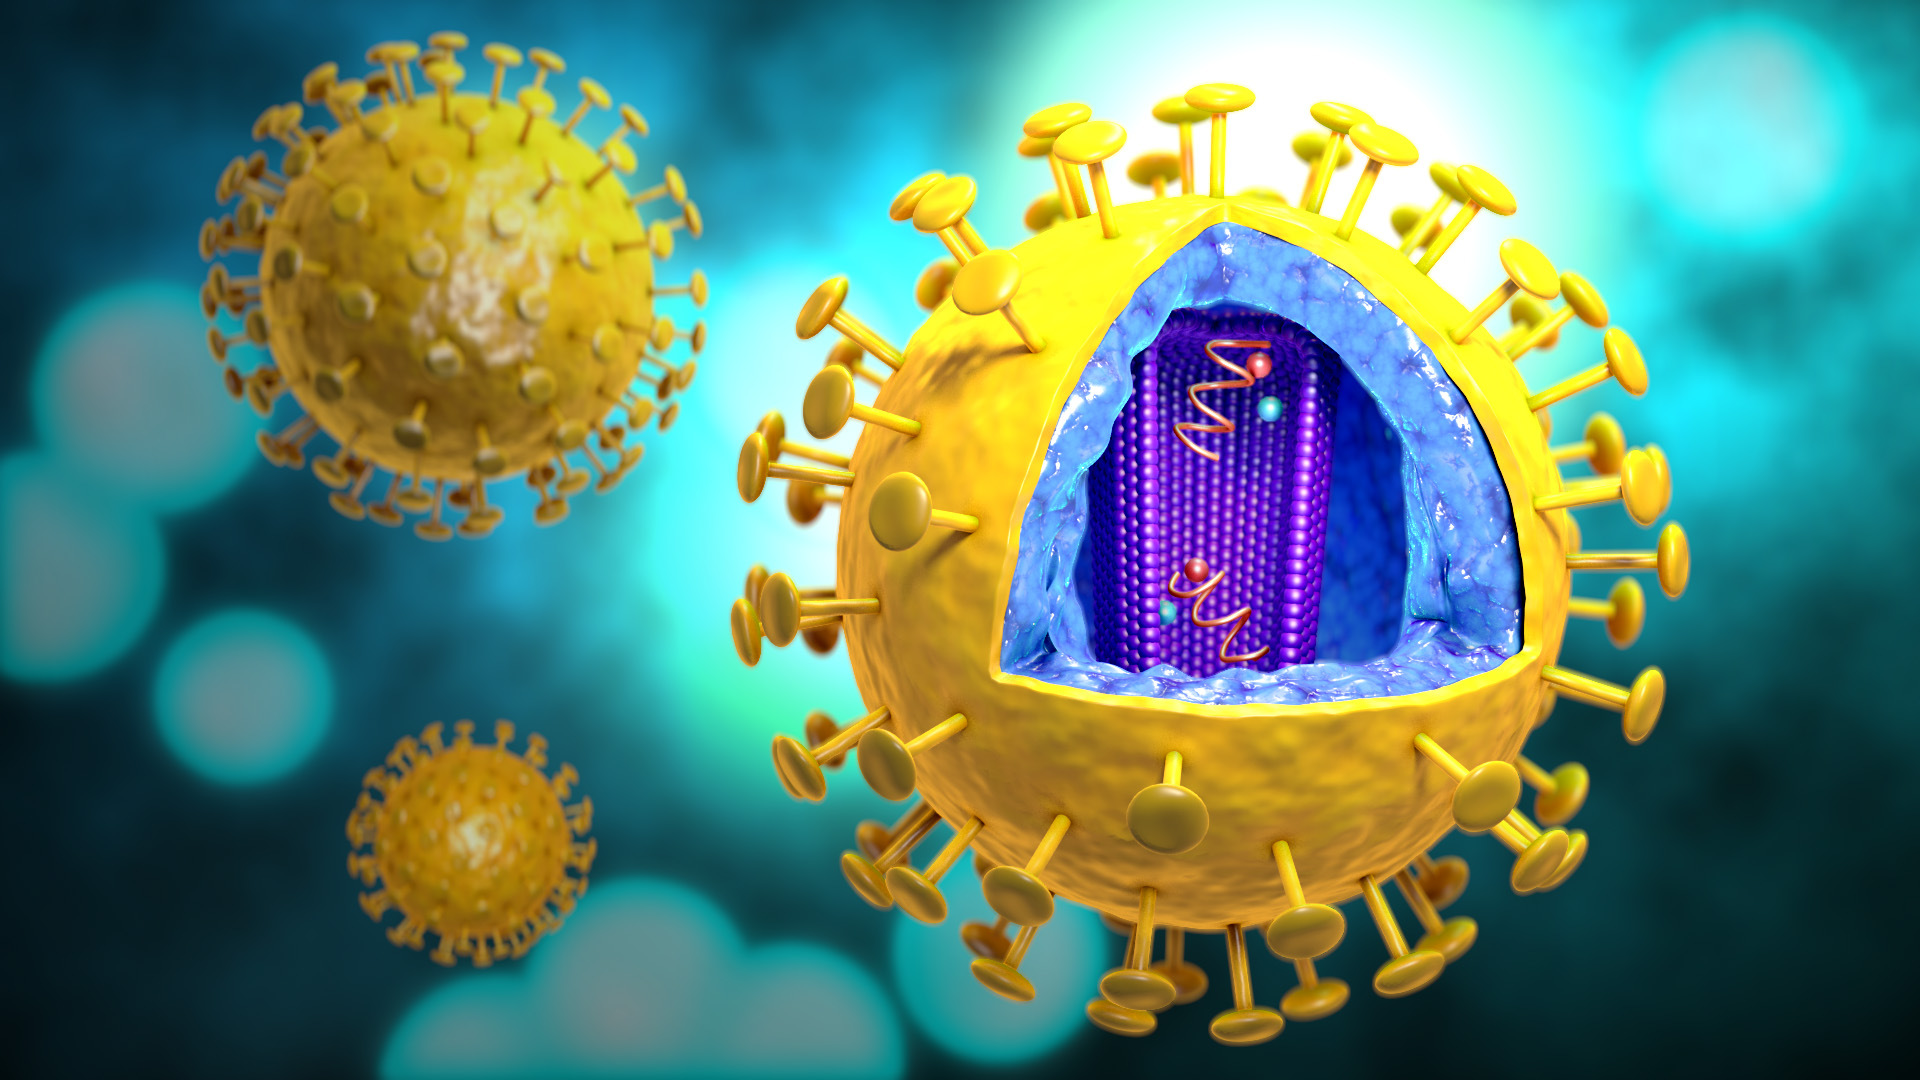 Human immunodeficiency virus. Вирус иммунодефицита человека (Human Immunodeficiency virus). Омикрон коронавирус. Модель вируса. ВИЧ фотографии вируса.